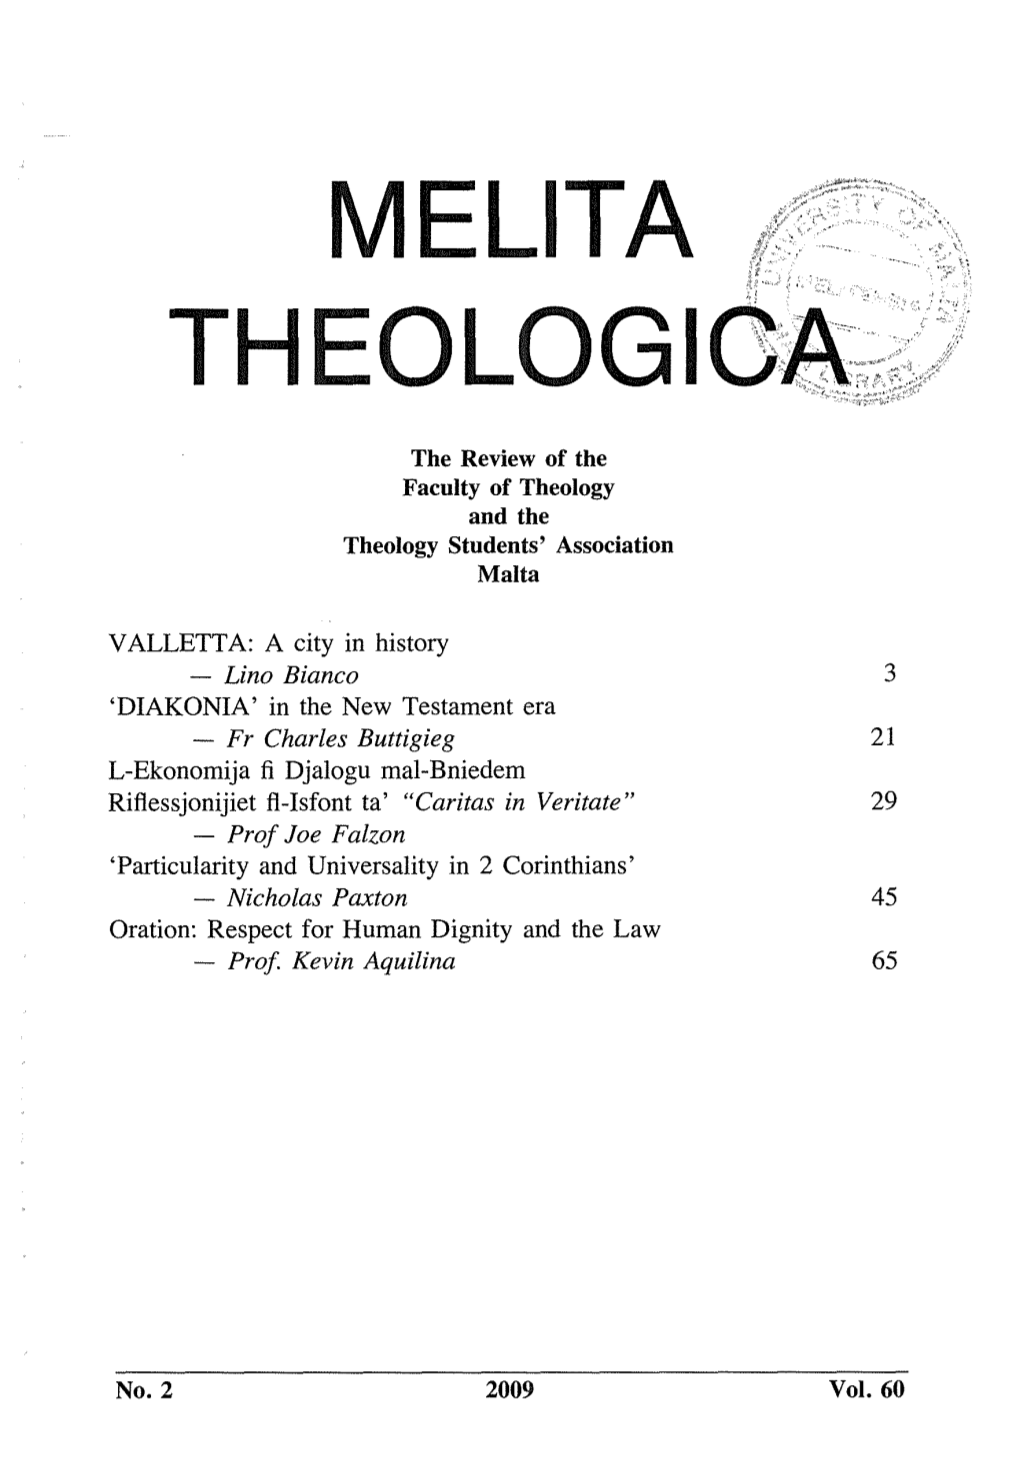 Melita Theologica Issn 1012-9588